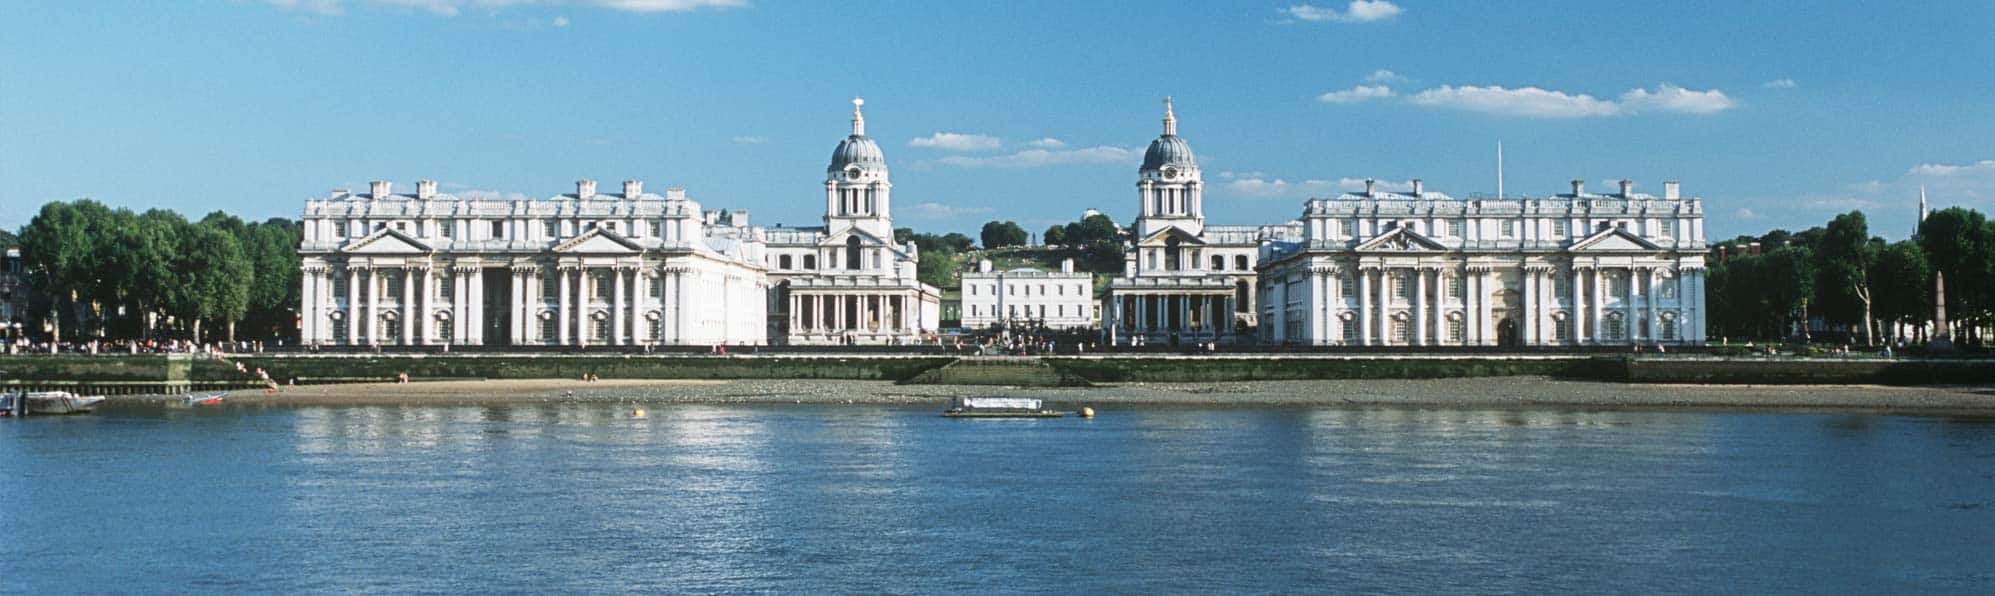 Greenwich Royal Navel College